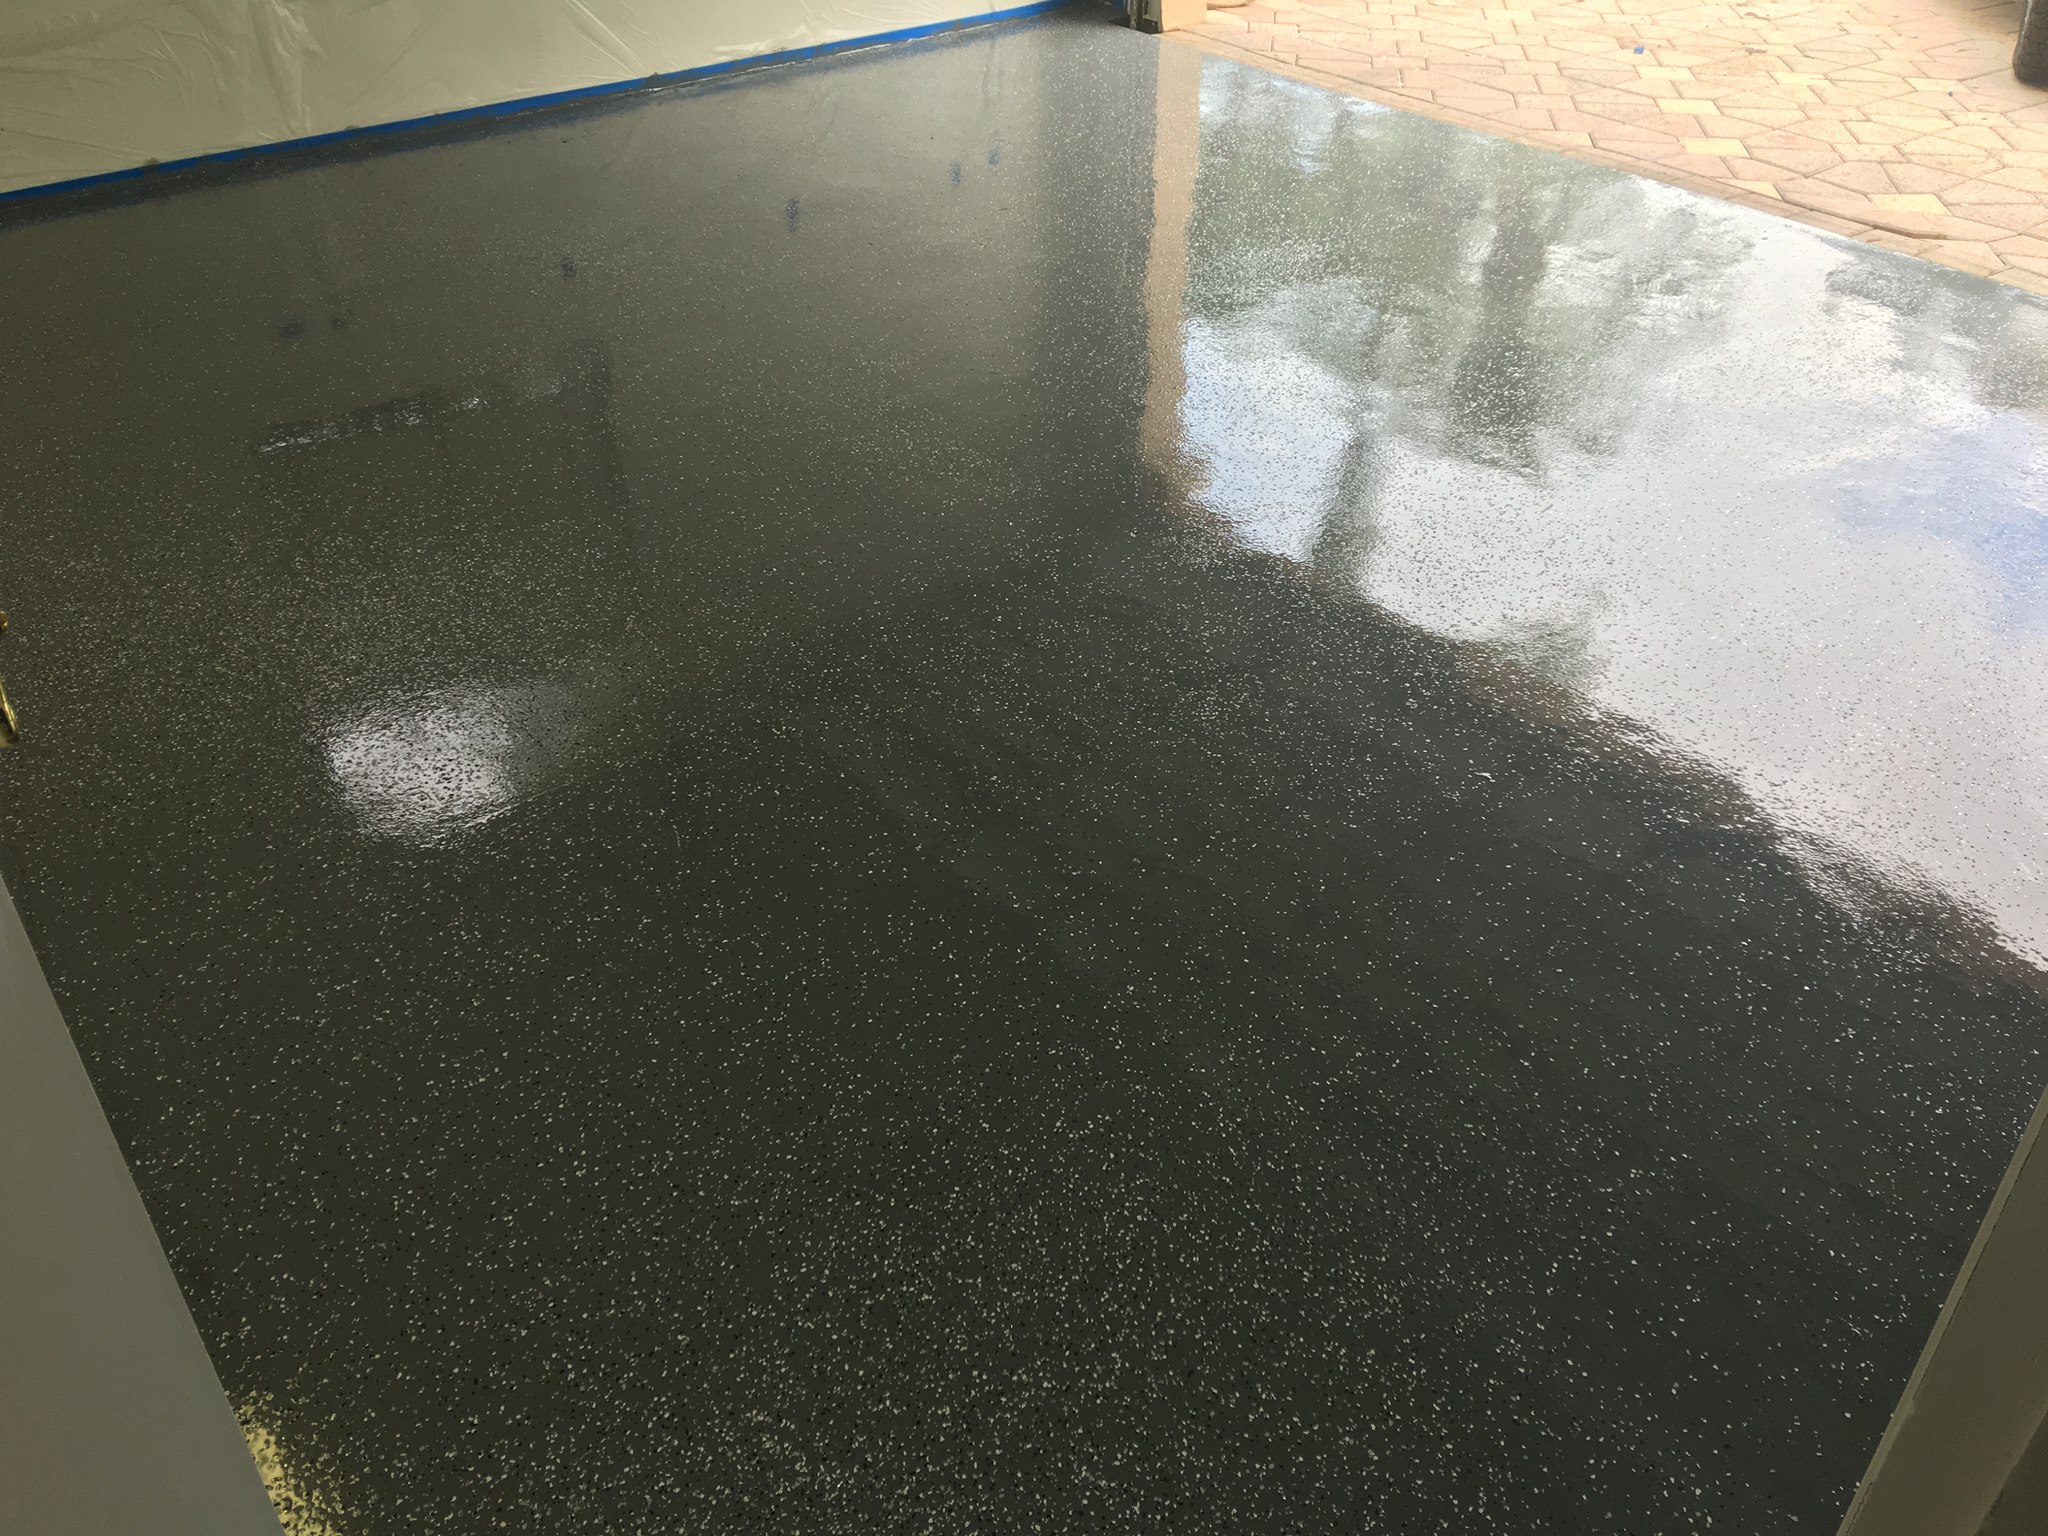 epoxy floor coatings - diy or hire a professional - marble polishing